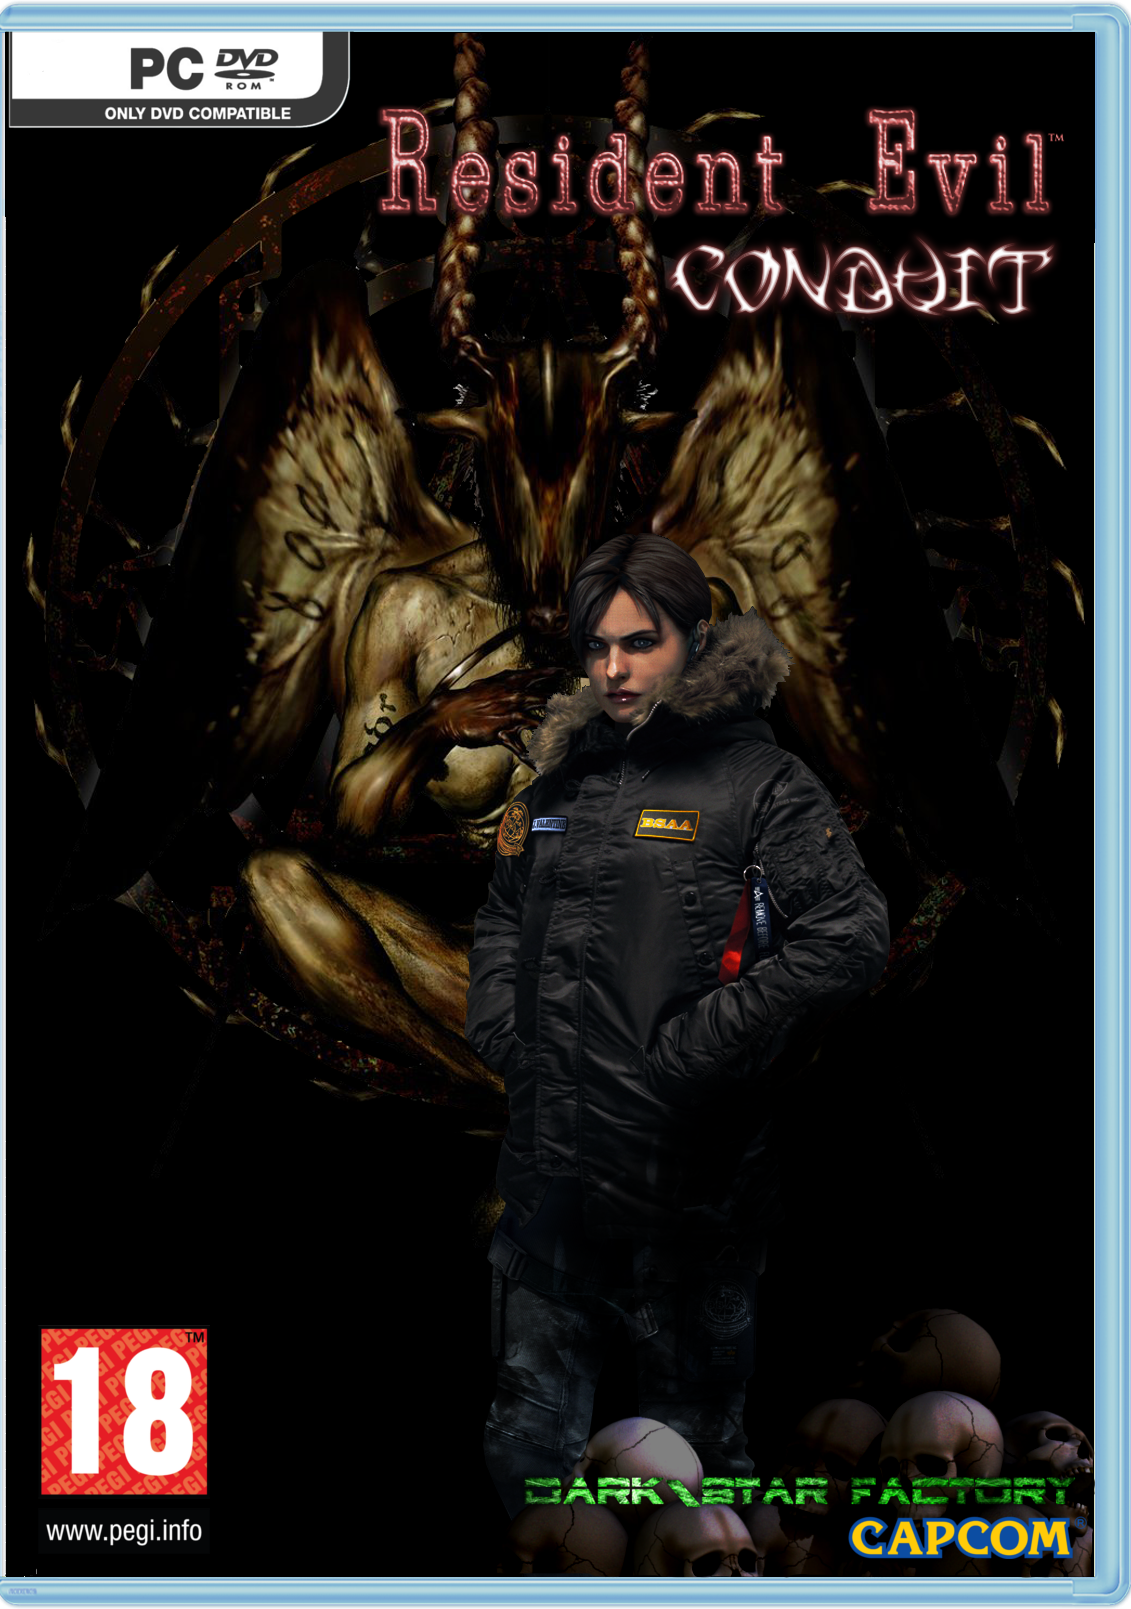 Resident Evil: Conduit (fictional box) box cover